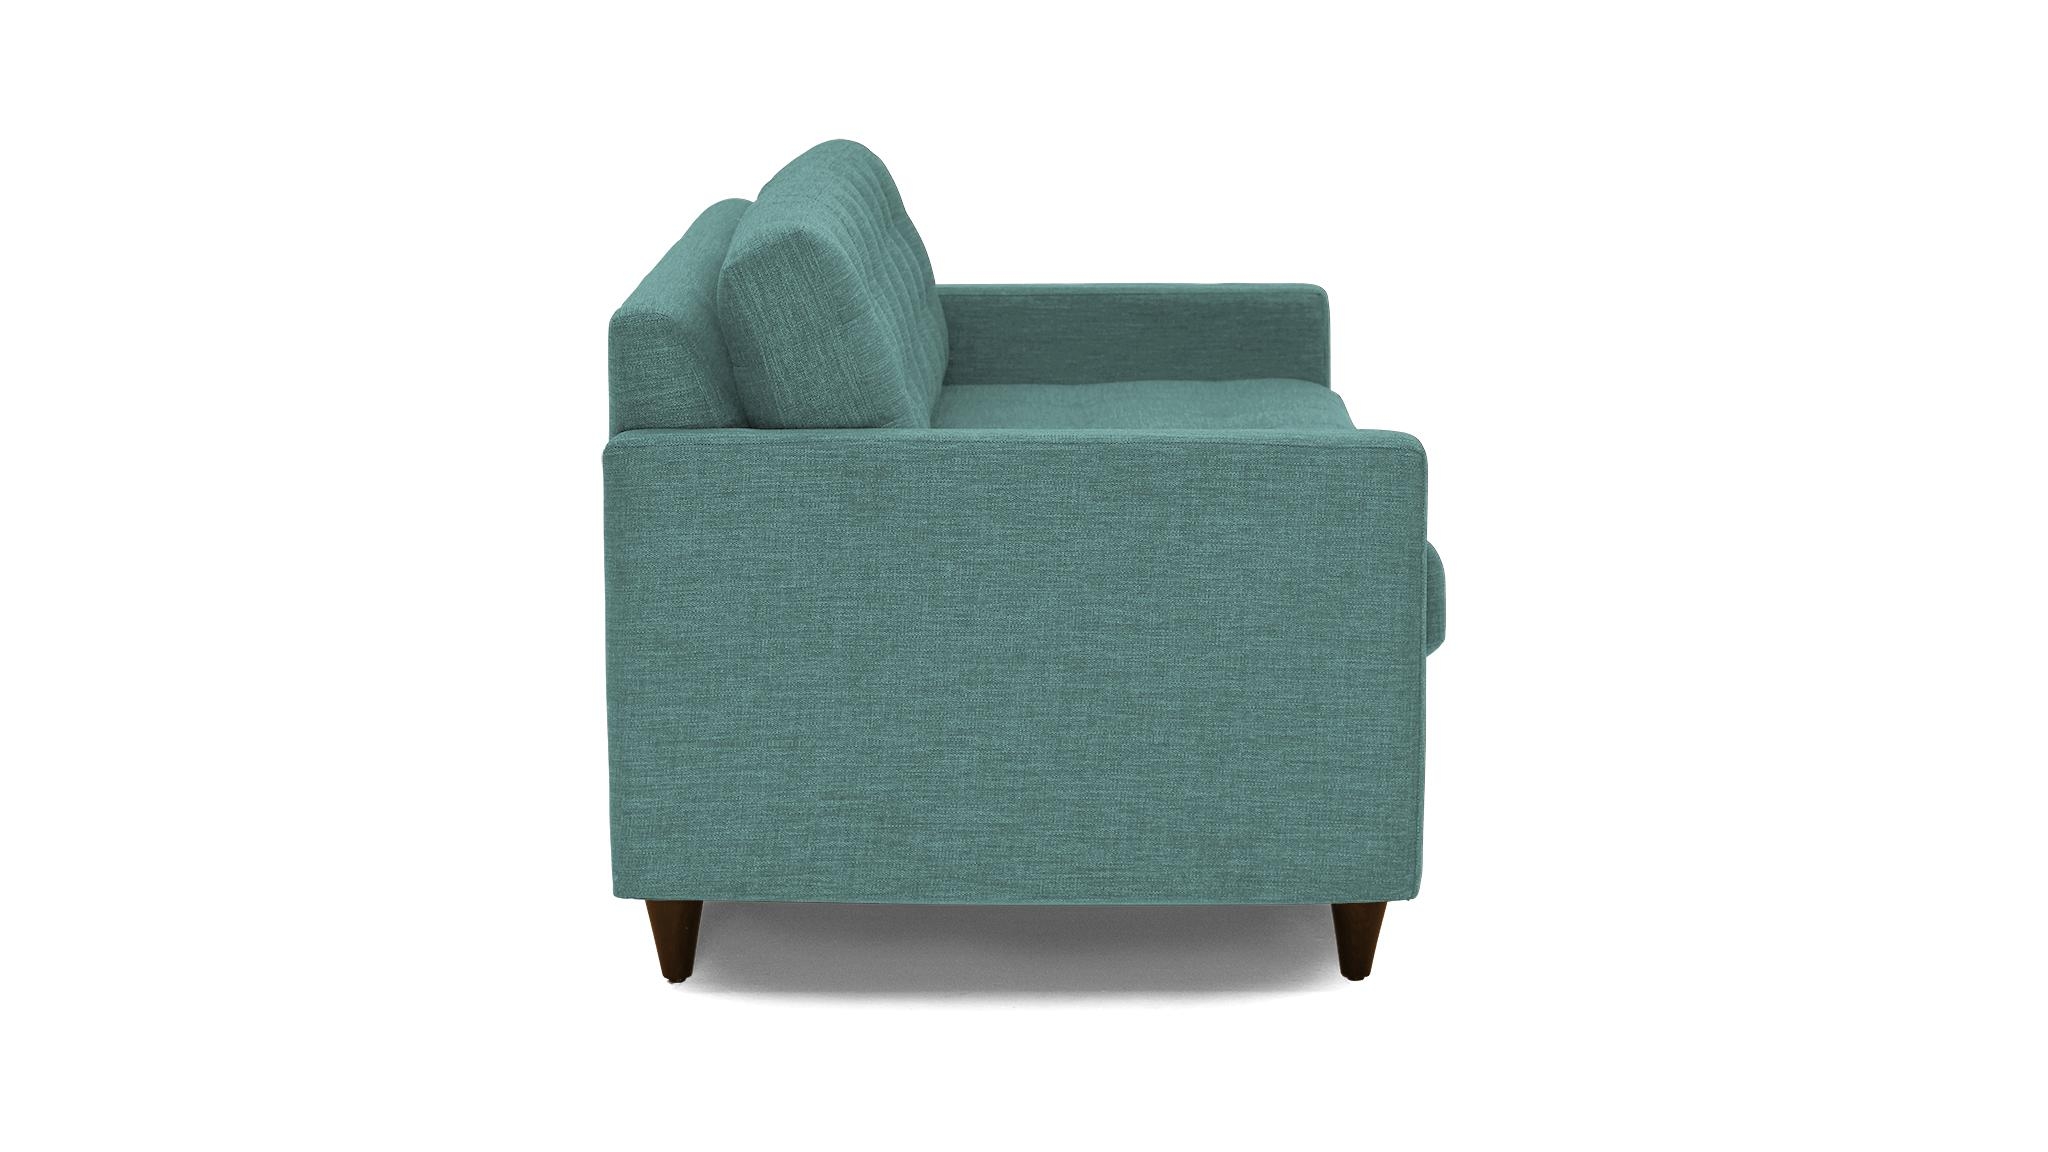 Green Eliot Mid Century Modern Sleeper Sofa - Essence Aqua - Mocha - Foam - Image 2